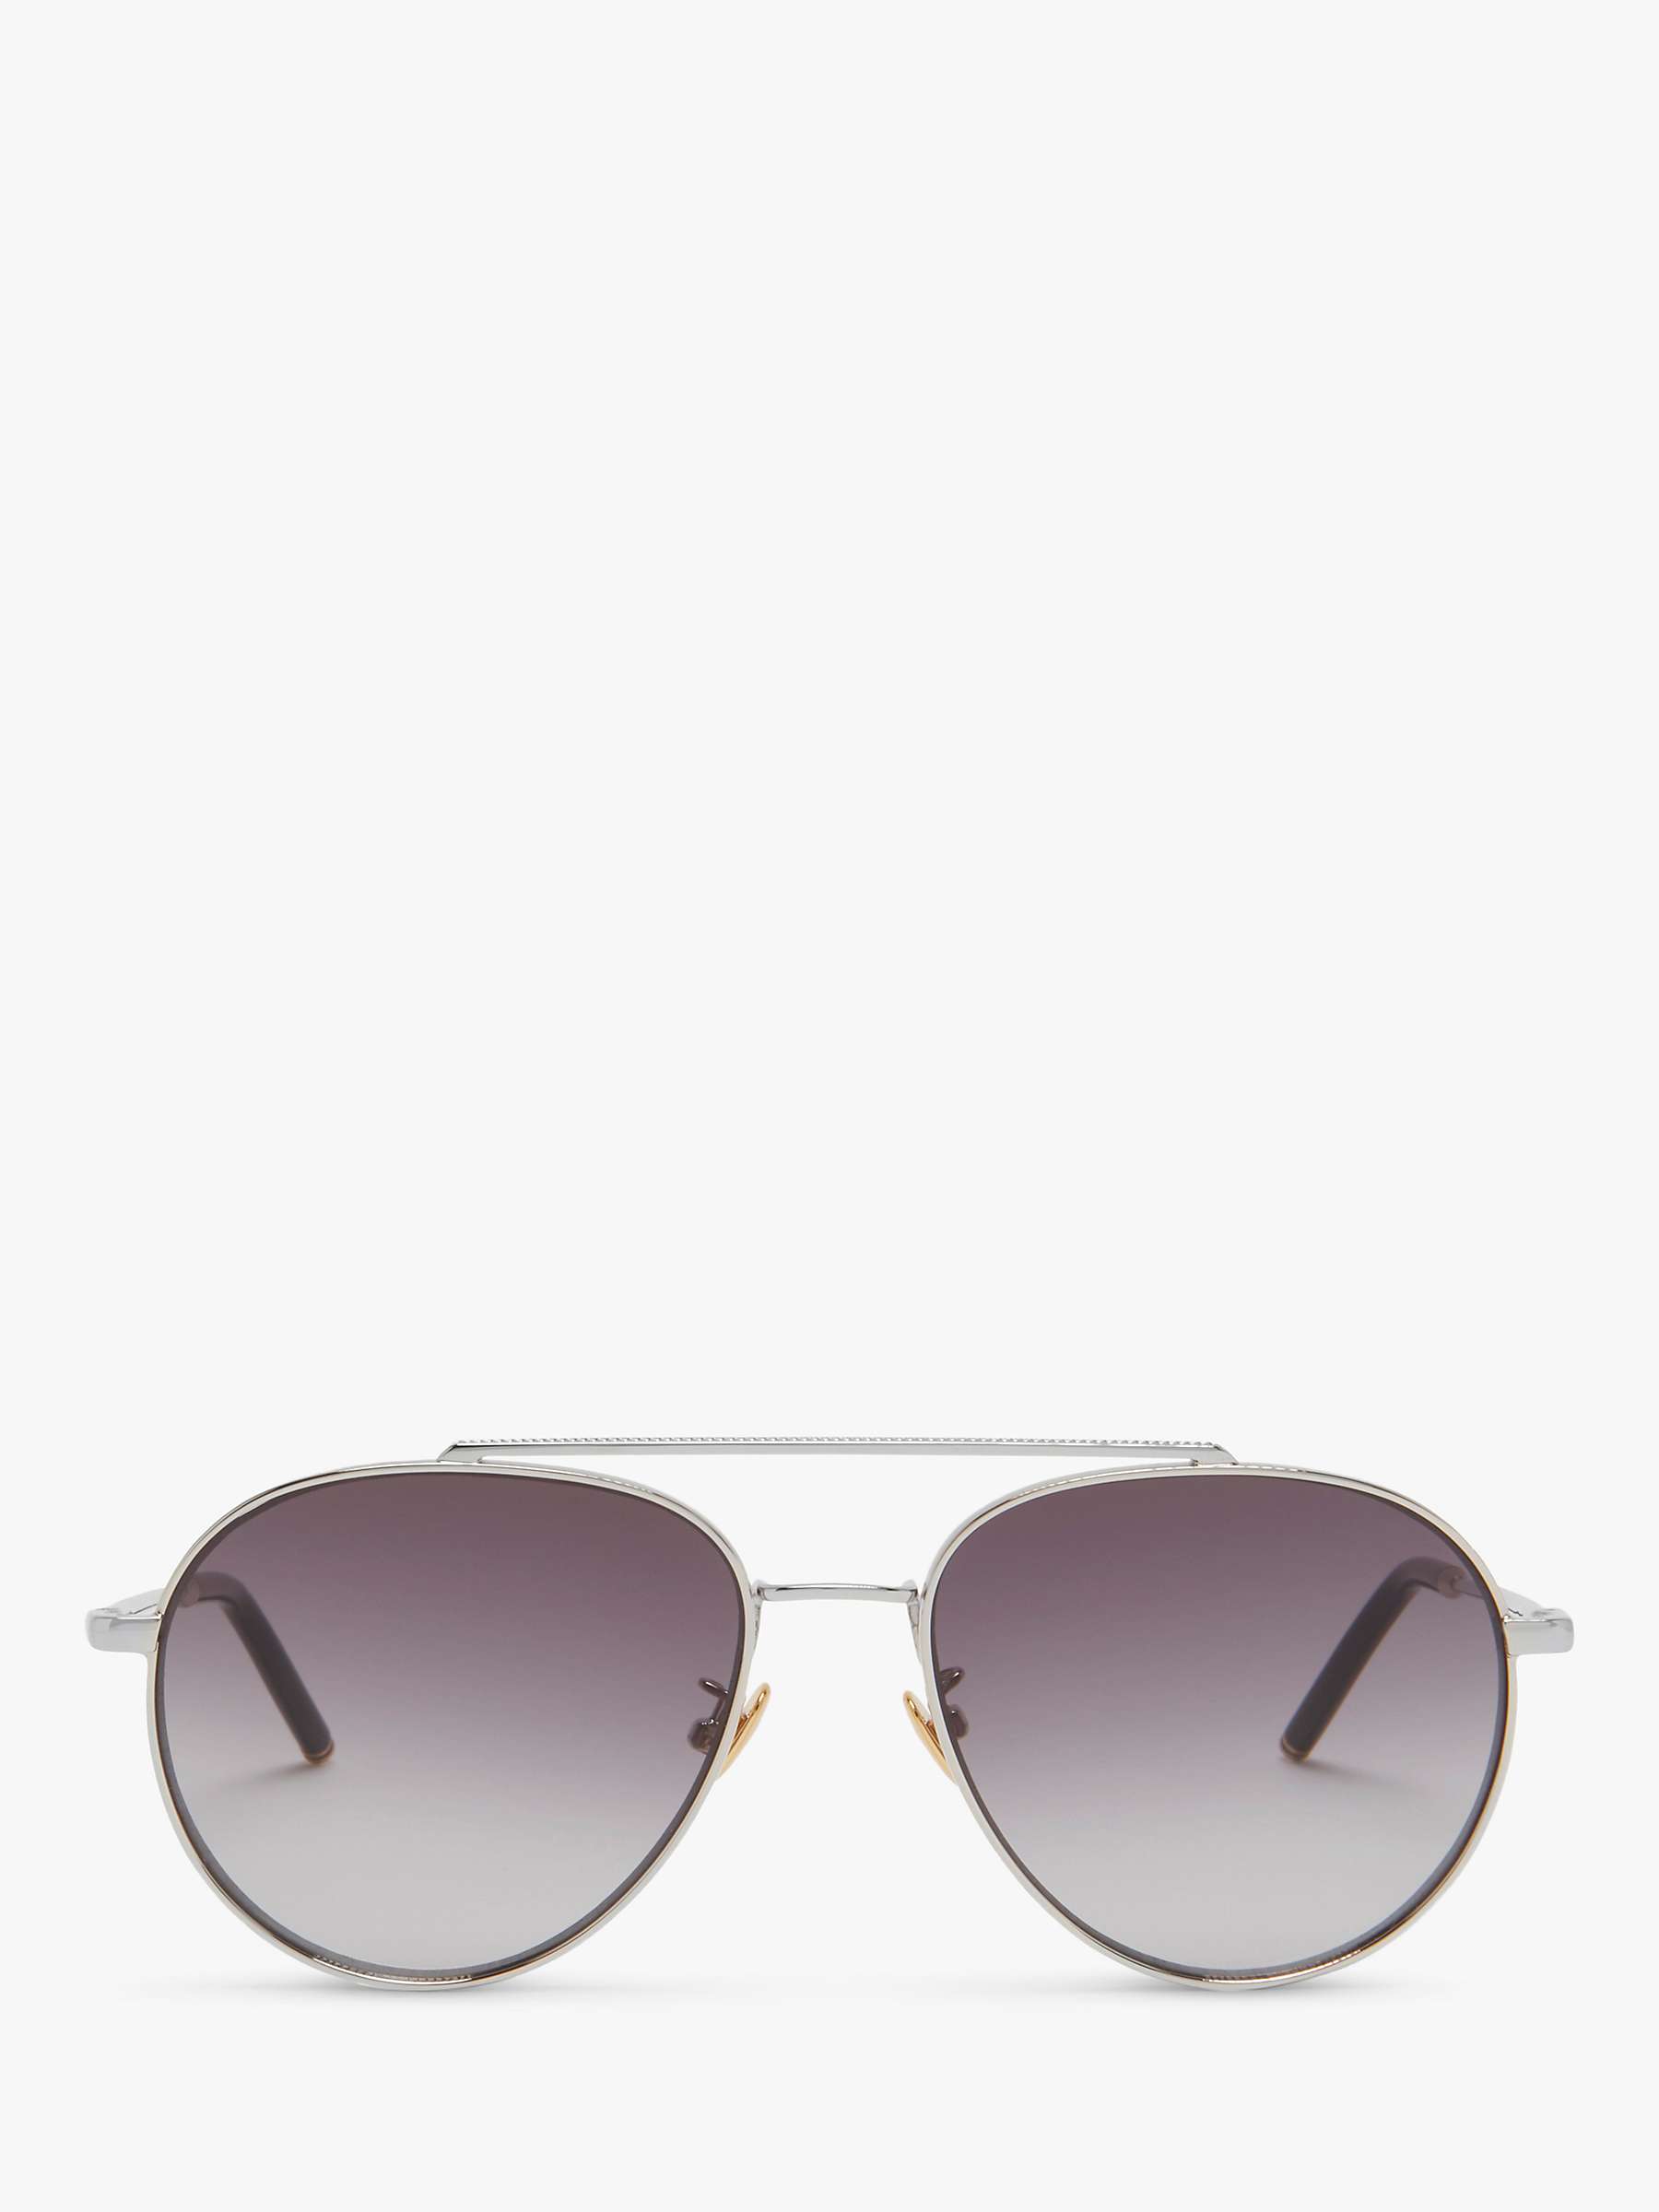 Buy Mulberry Women's Tony Aviator Sunglasses Online at johnlewis.com